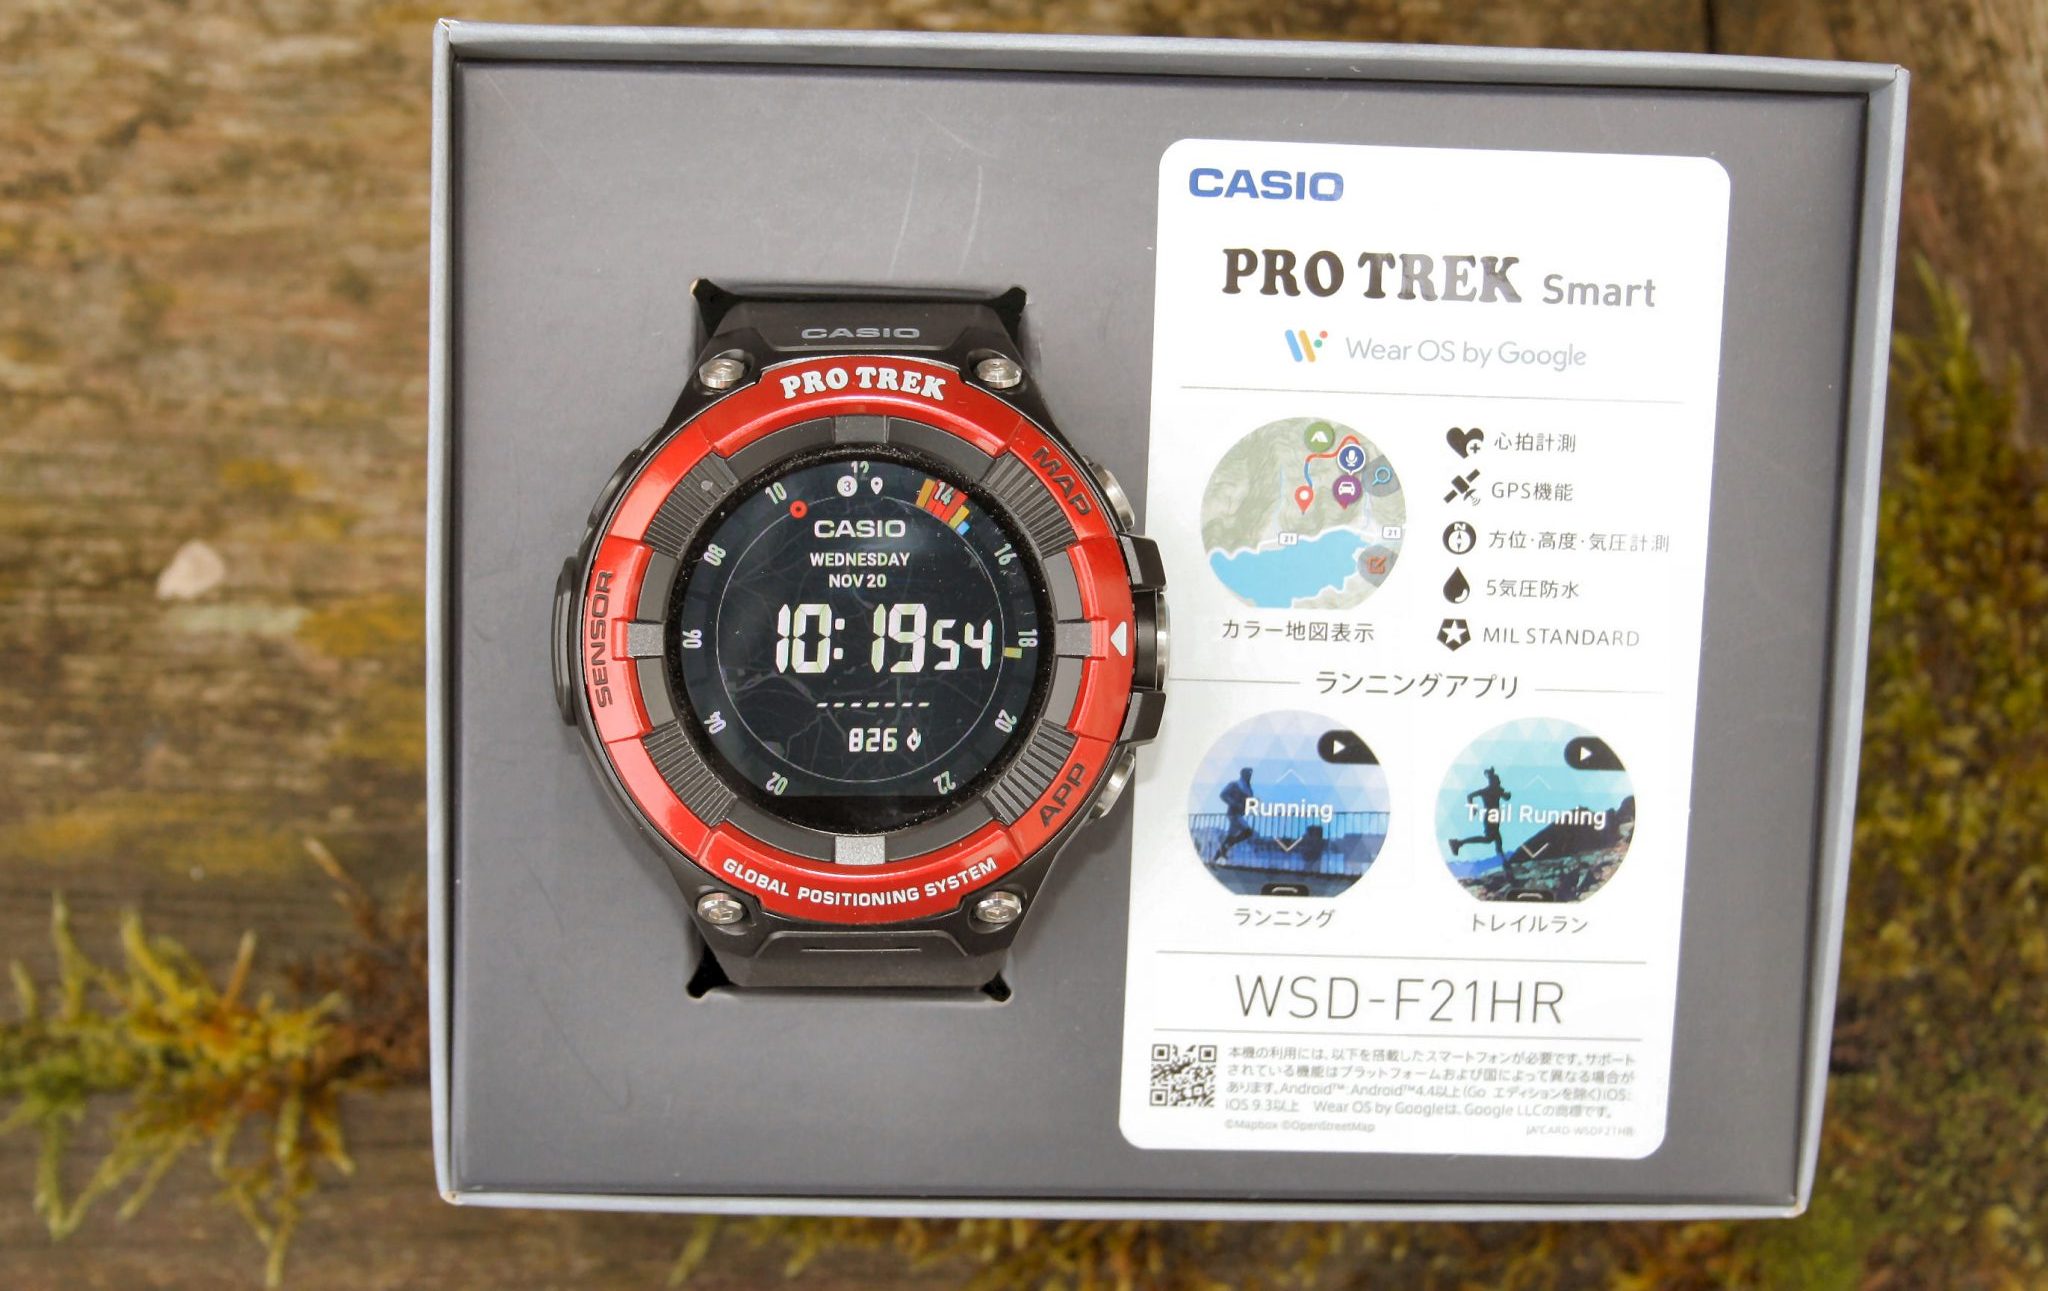 Casio WSD-F21HR Review | Pro Trek Smart | Specs